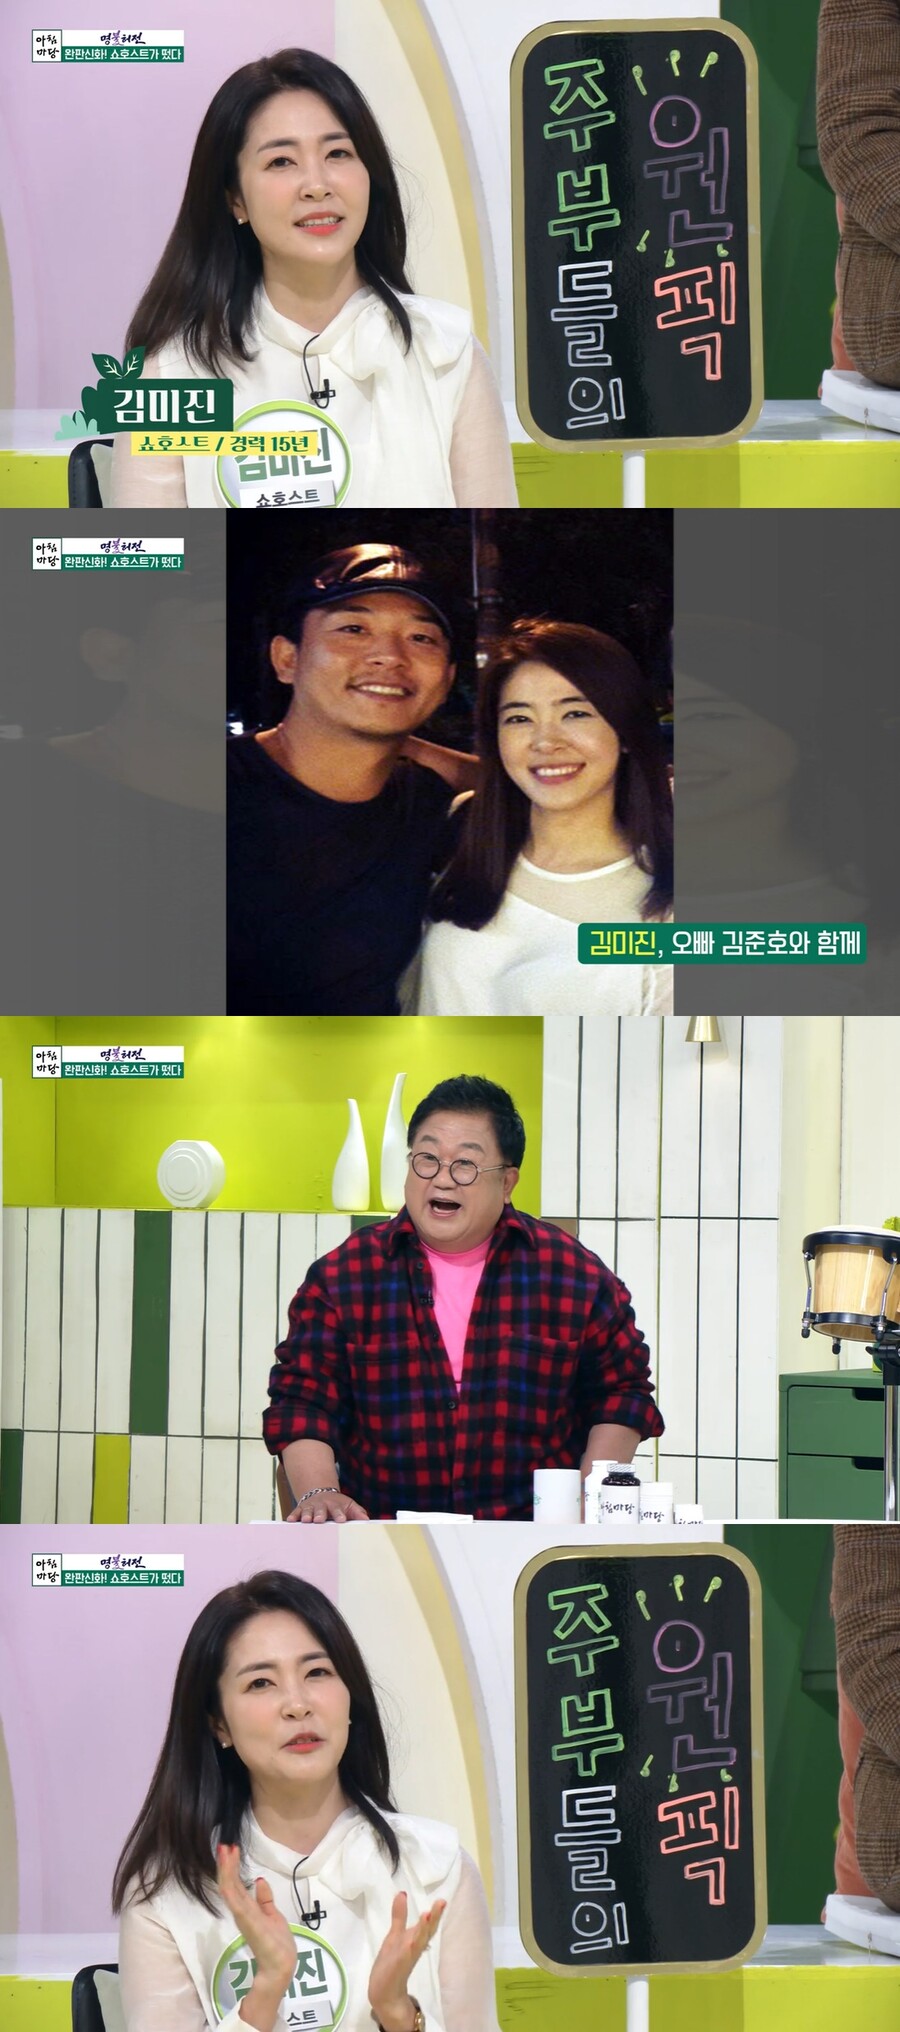 ▲ KBS1 '아침마당' 쇼호스트 김미진. 출처| KBS